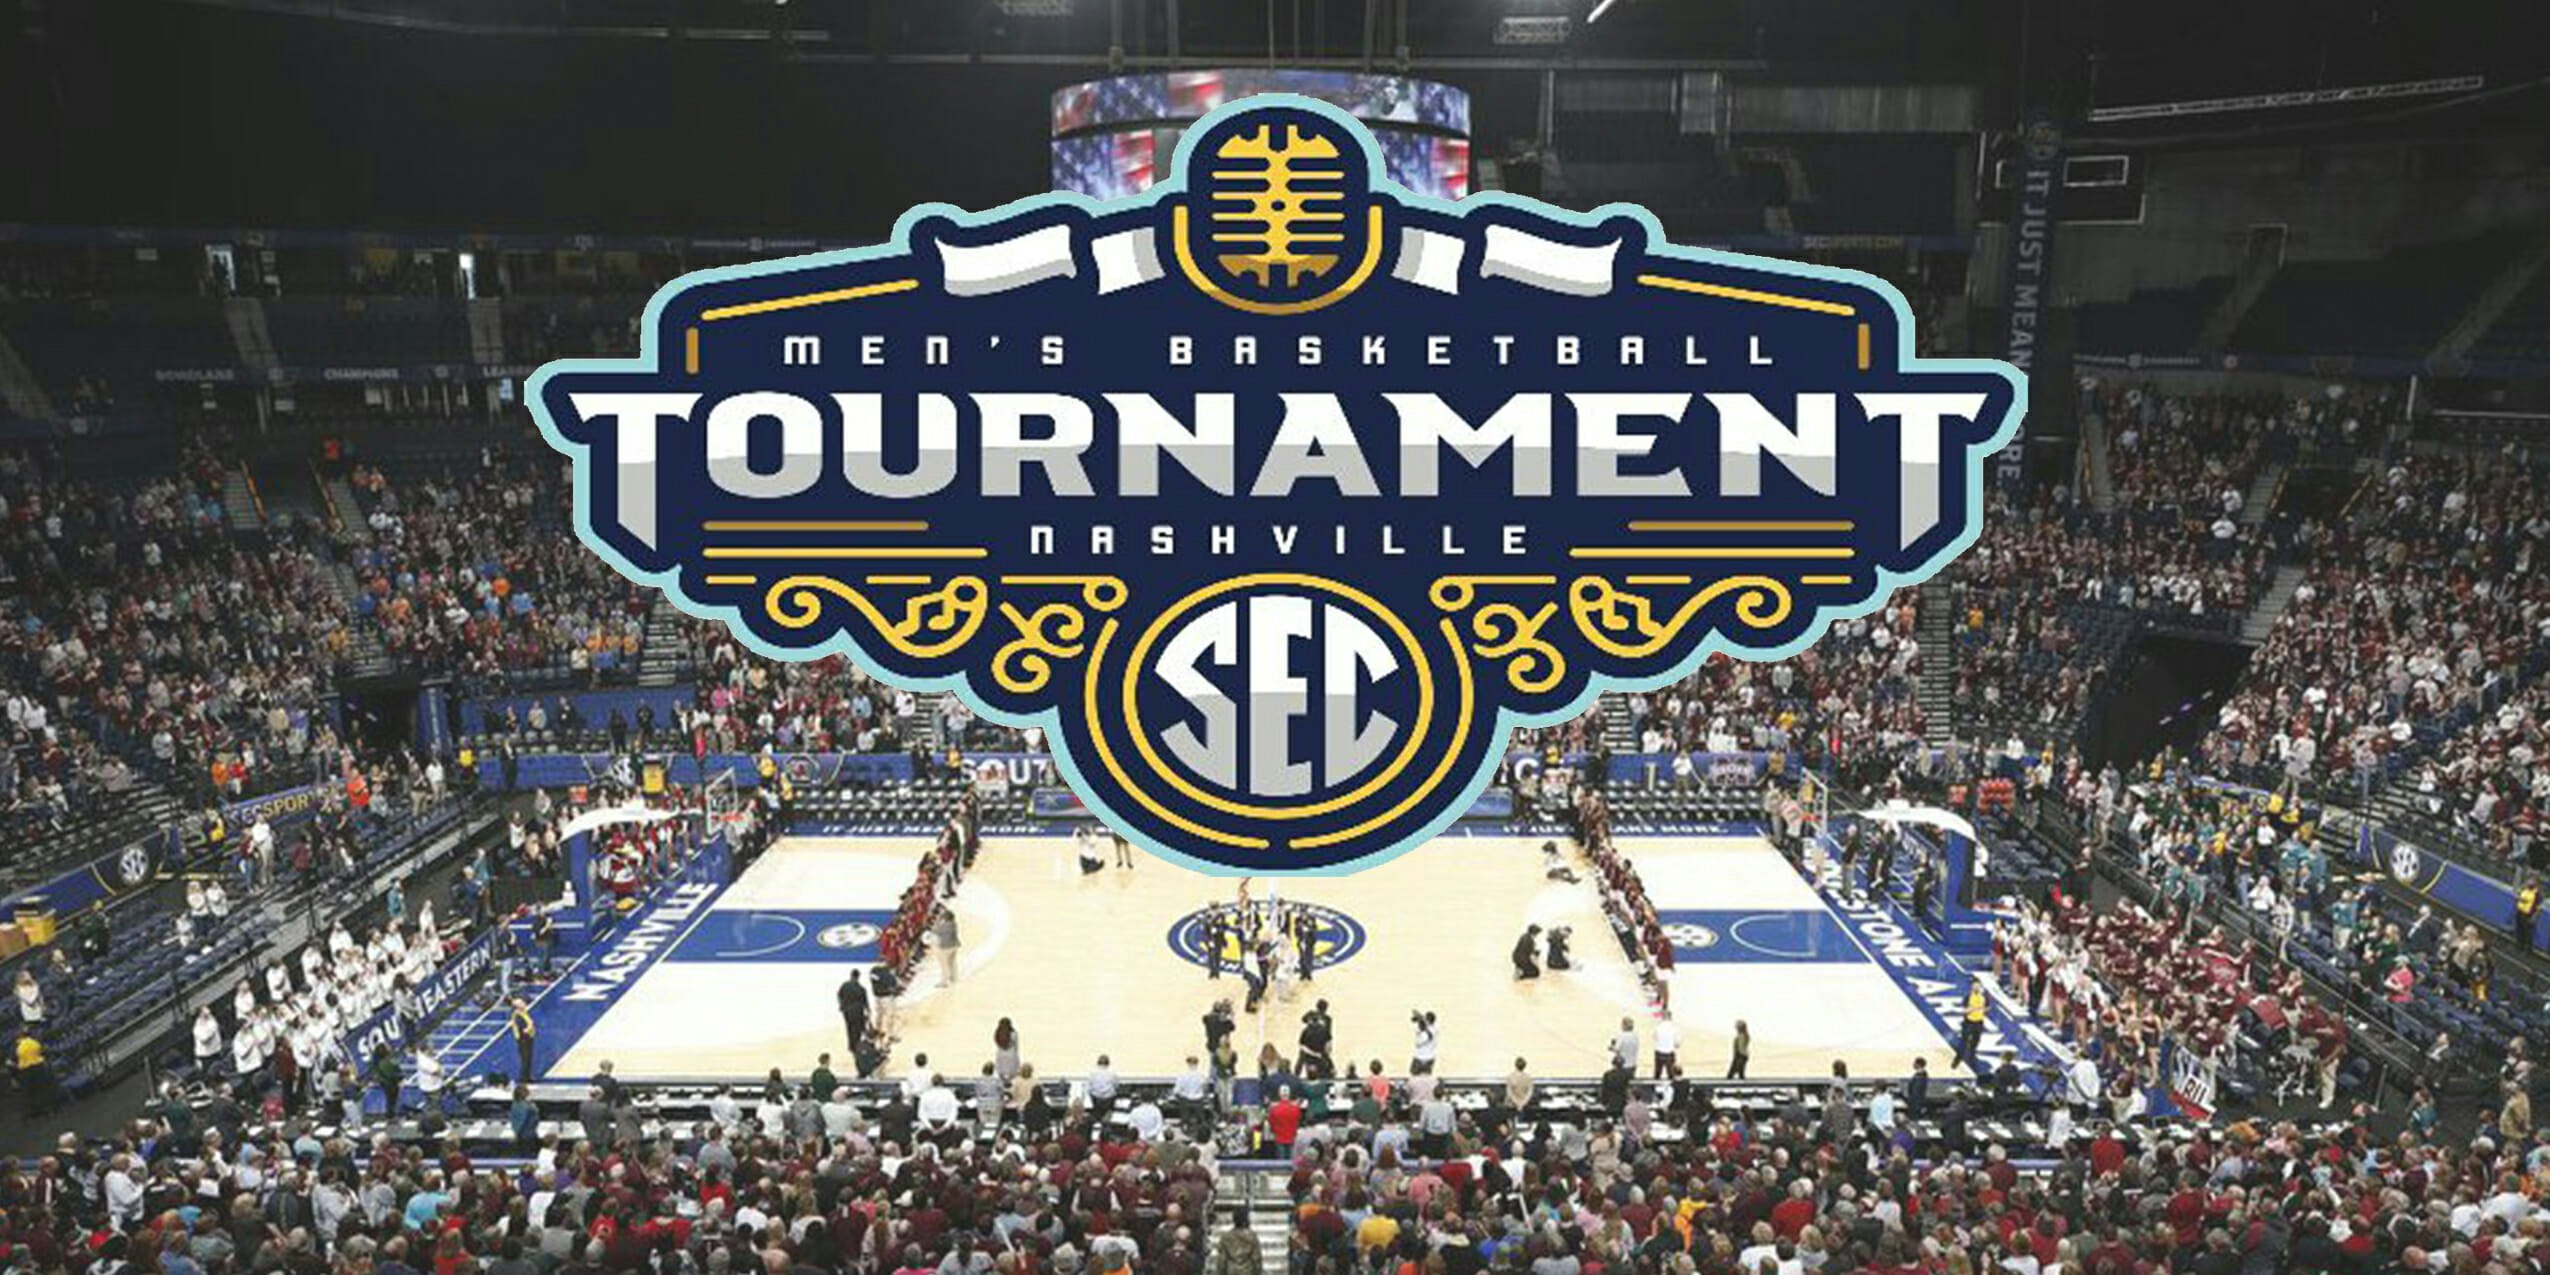 2019 SEC Tournament Live Stream Watch Basketball Games for Free